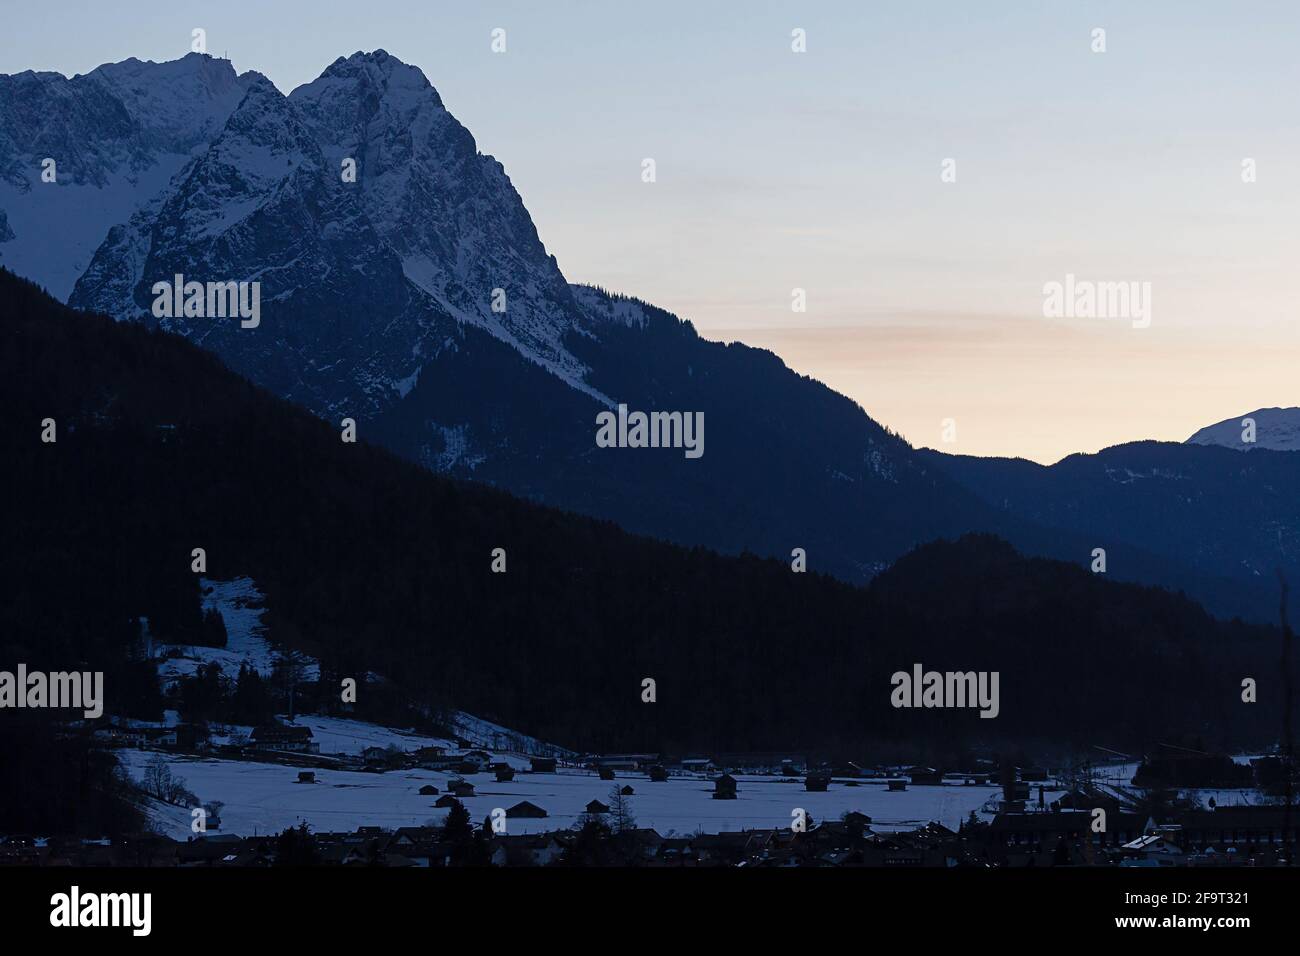 The Waxenstein are Mountains of the Wetterstein Mountains. Stock Photo